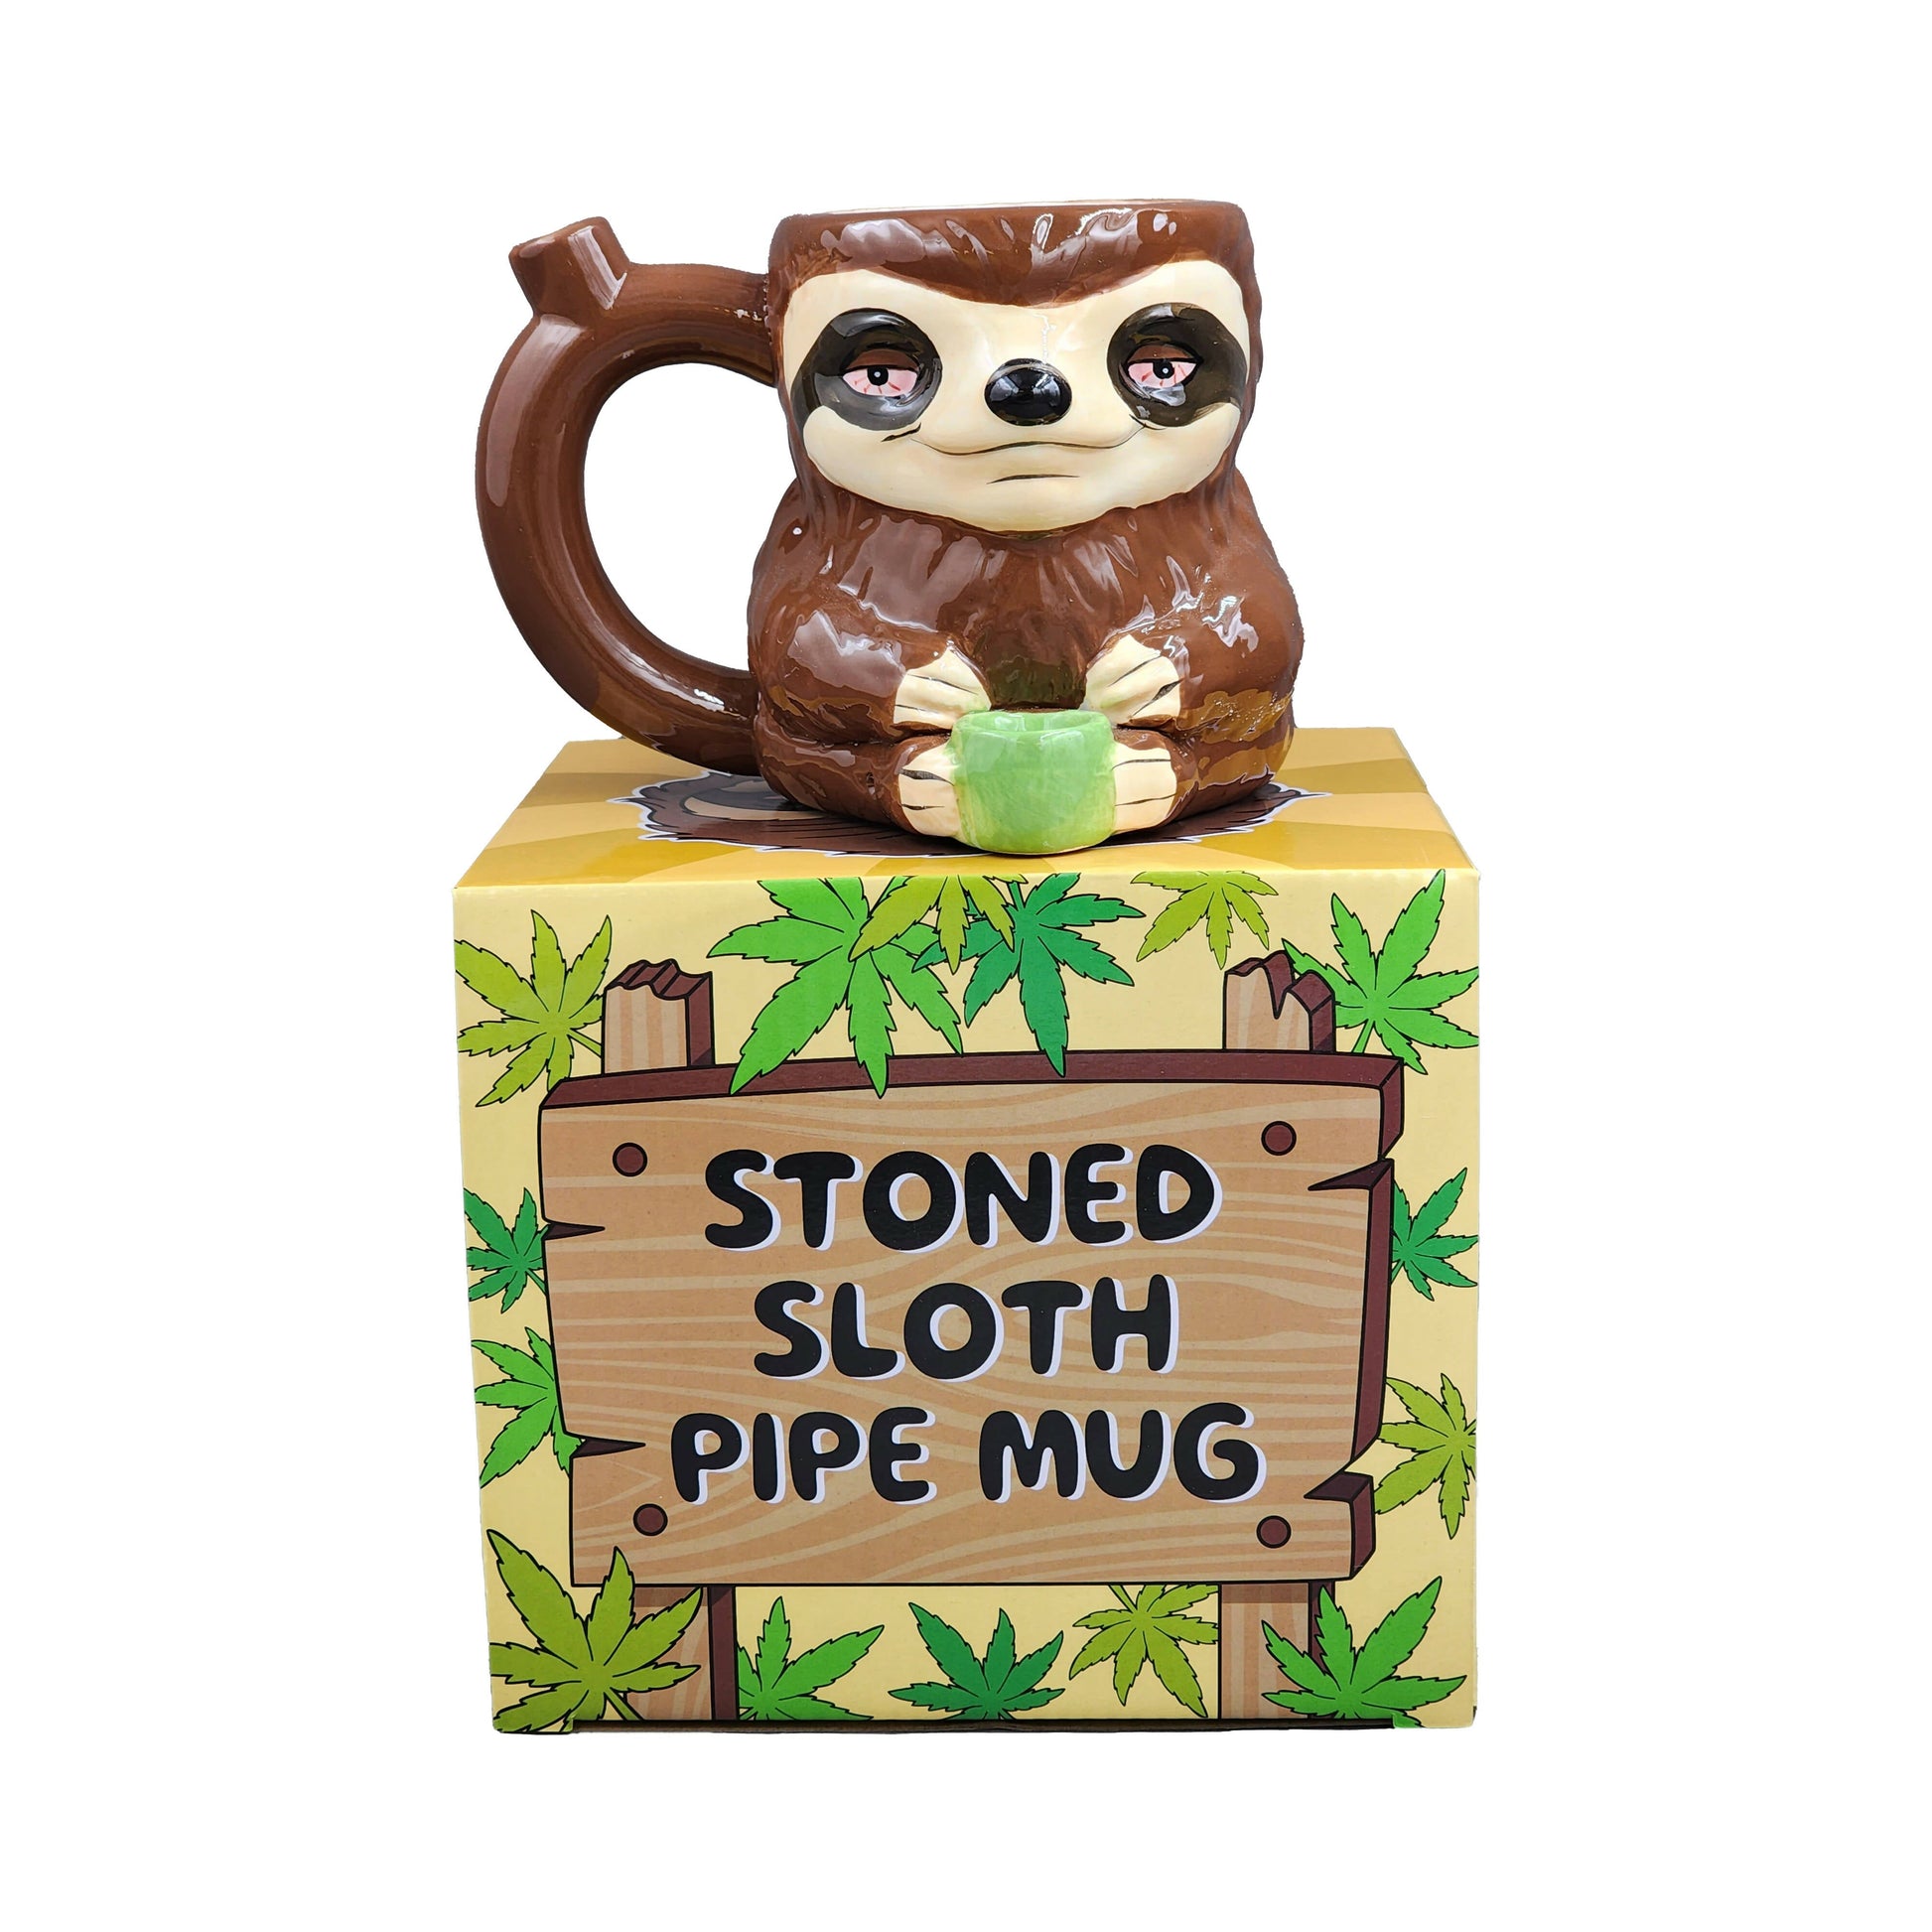 Stoned sloth mug pipe_7